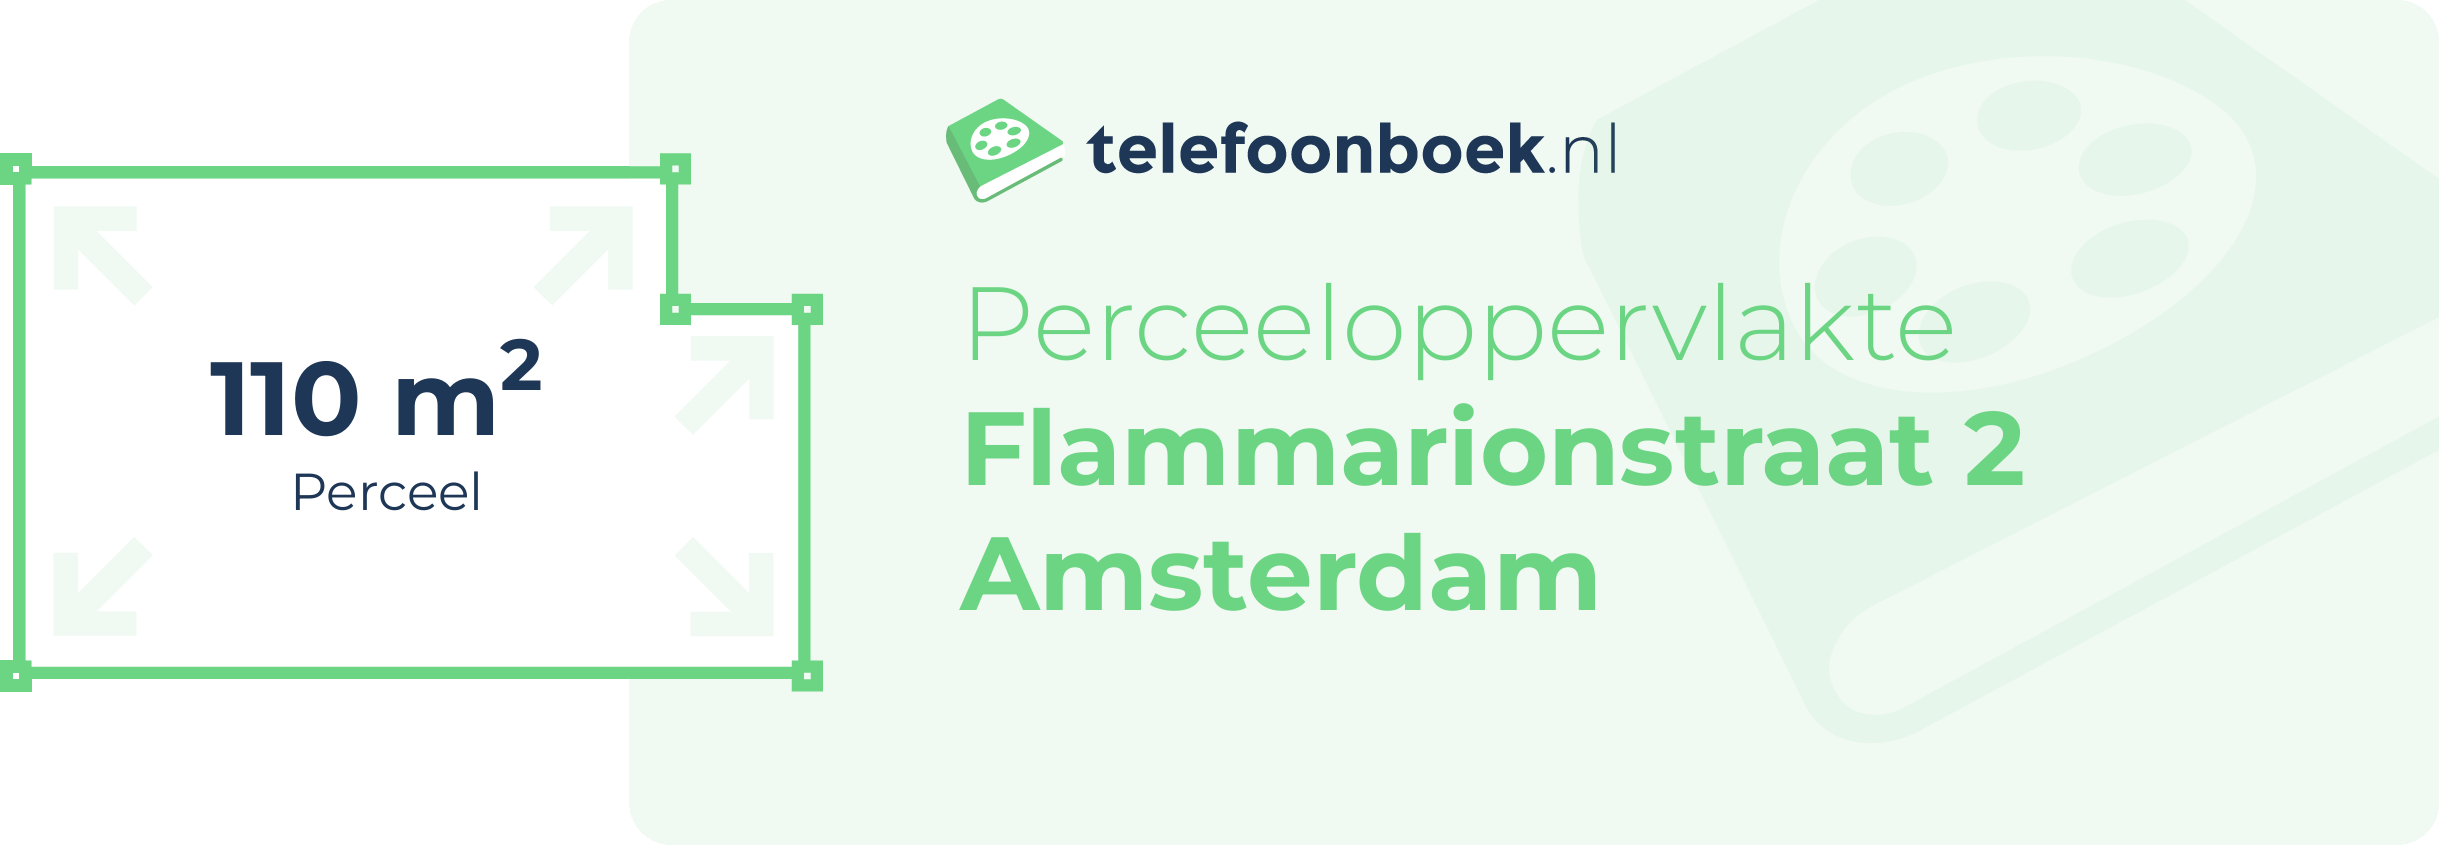 Perceeloppervlakte Flammarionstraat 2 Amsterdam